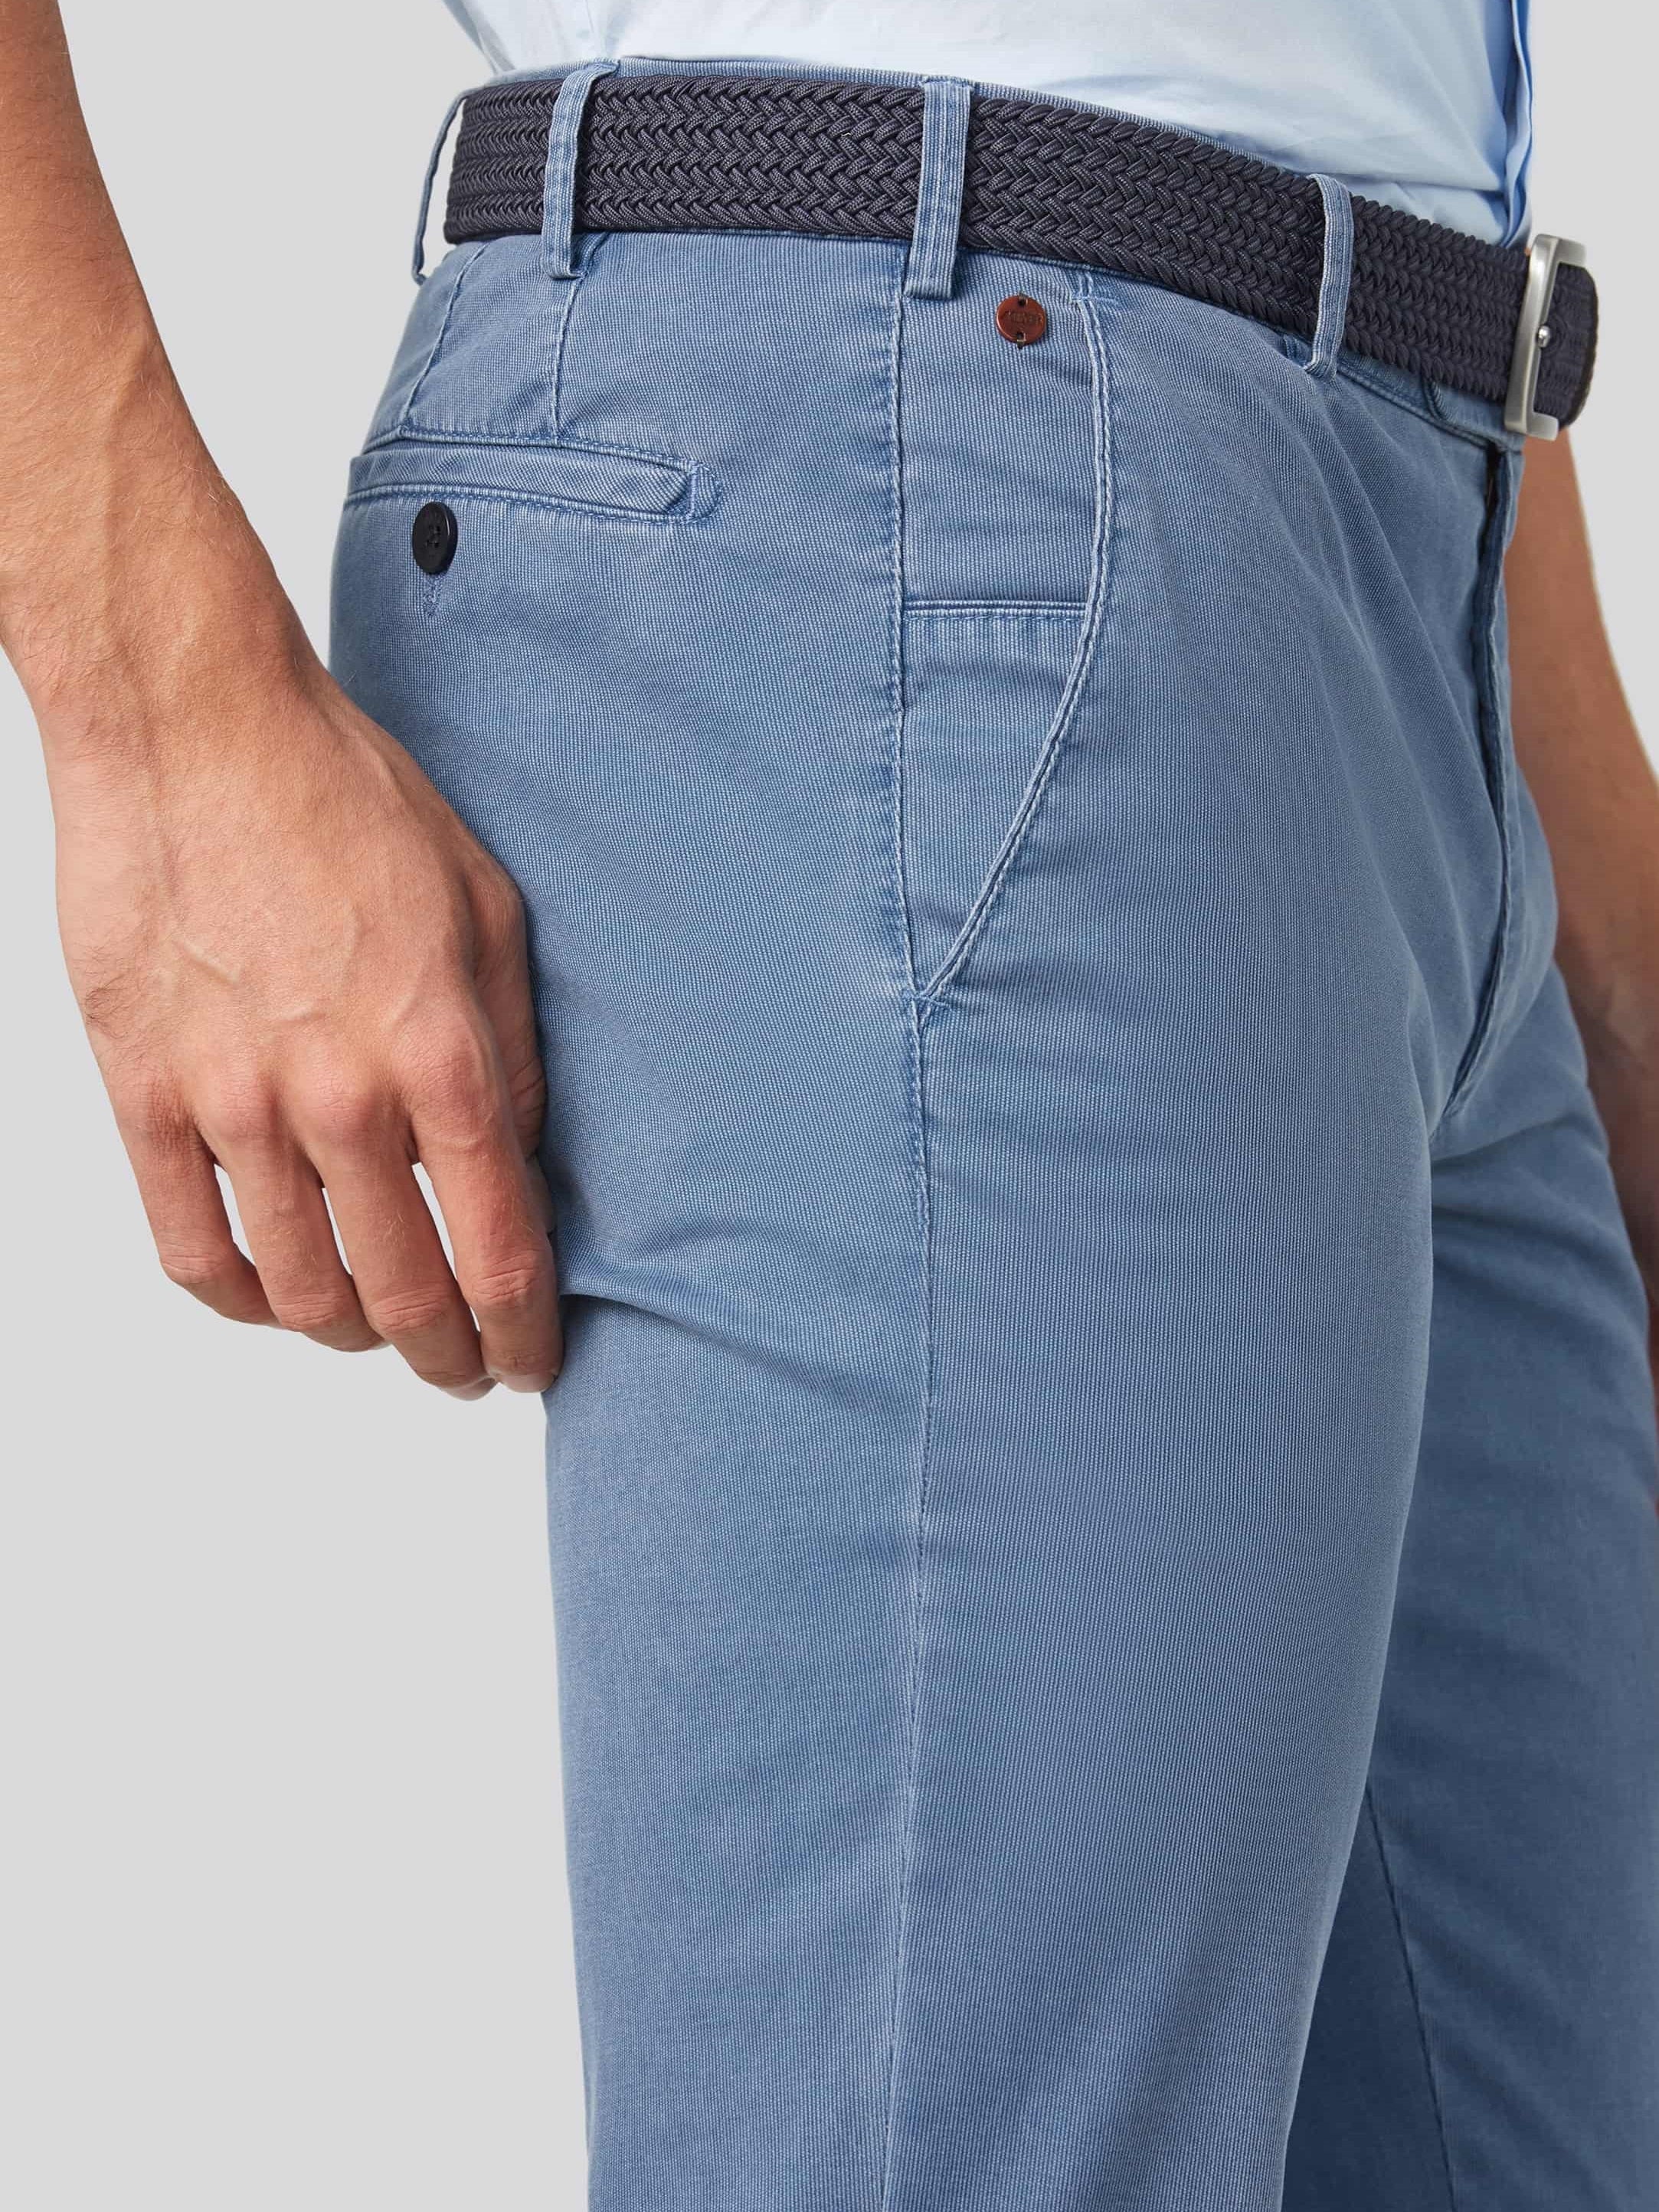 50% OFF - MEYER Trousers - New York Summer Cotelé Chinos - Blue - Size: 40 REG